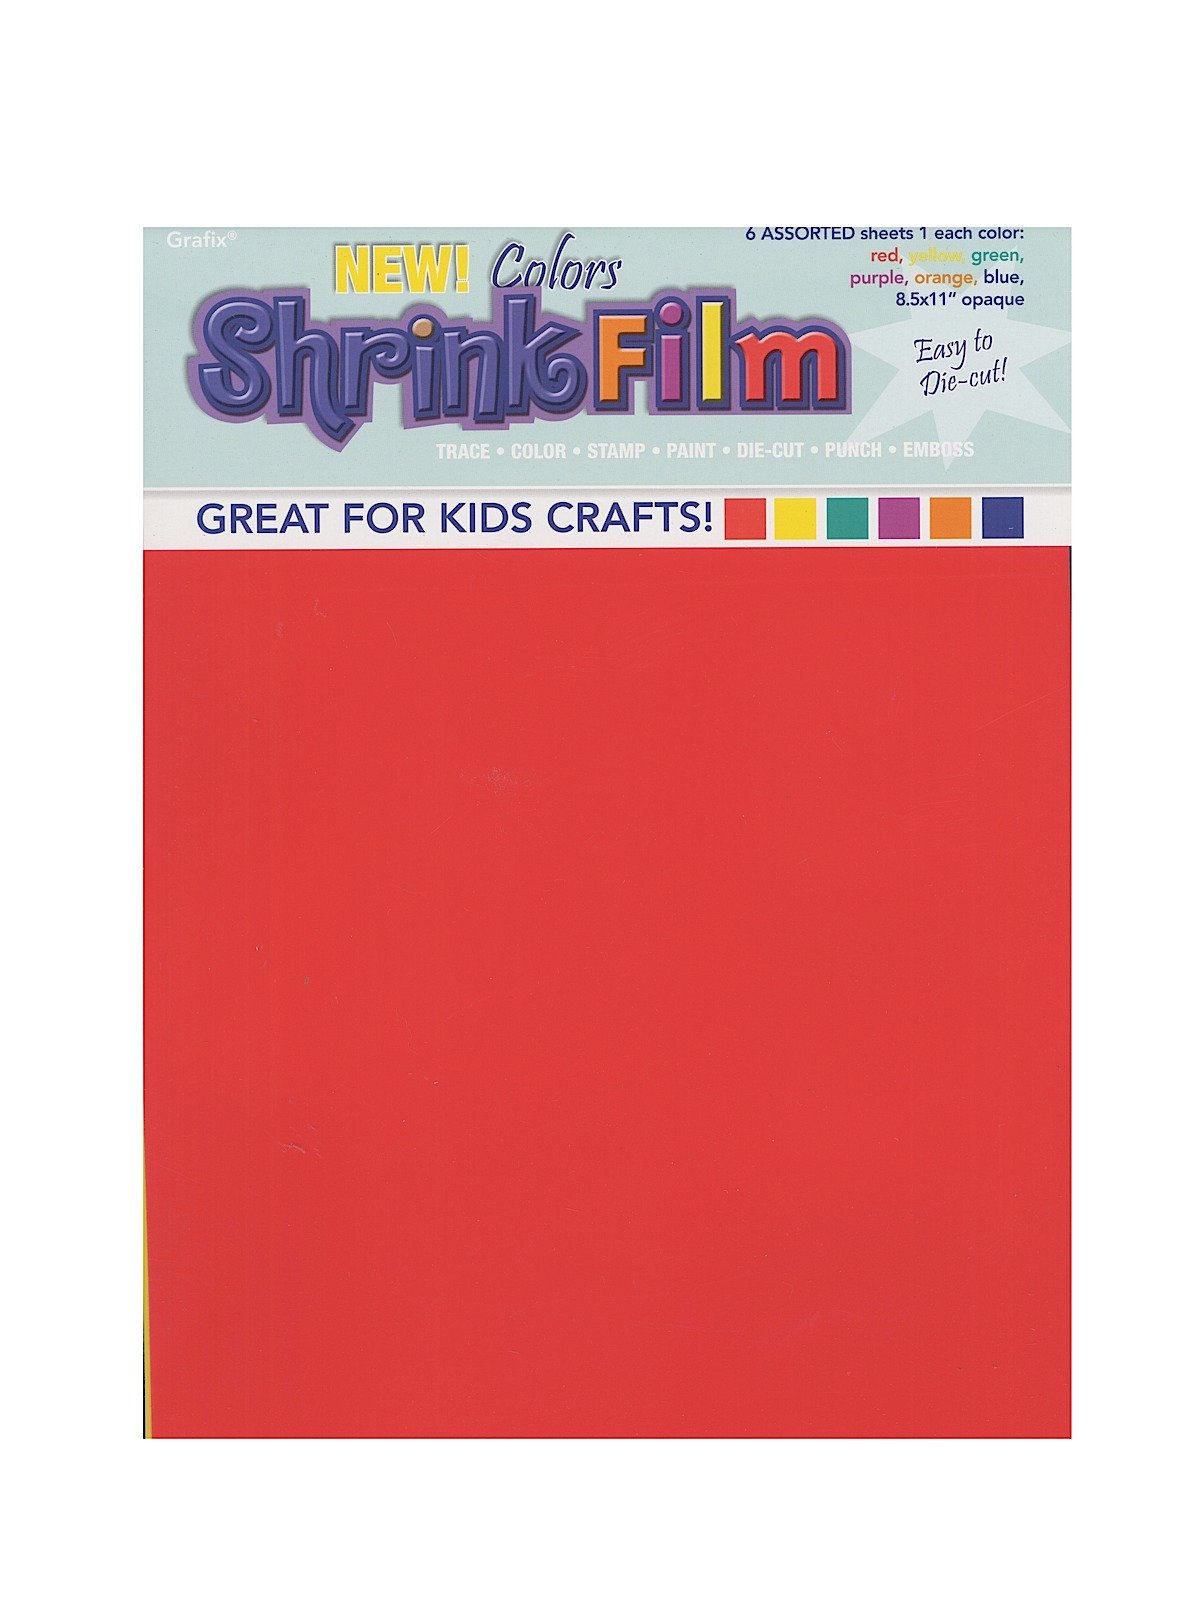 Grafix - Shrink Plastic CLEAR (8.5x11 - 6 sheets)